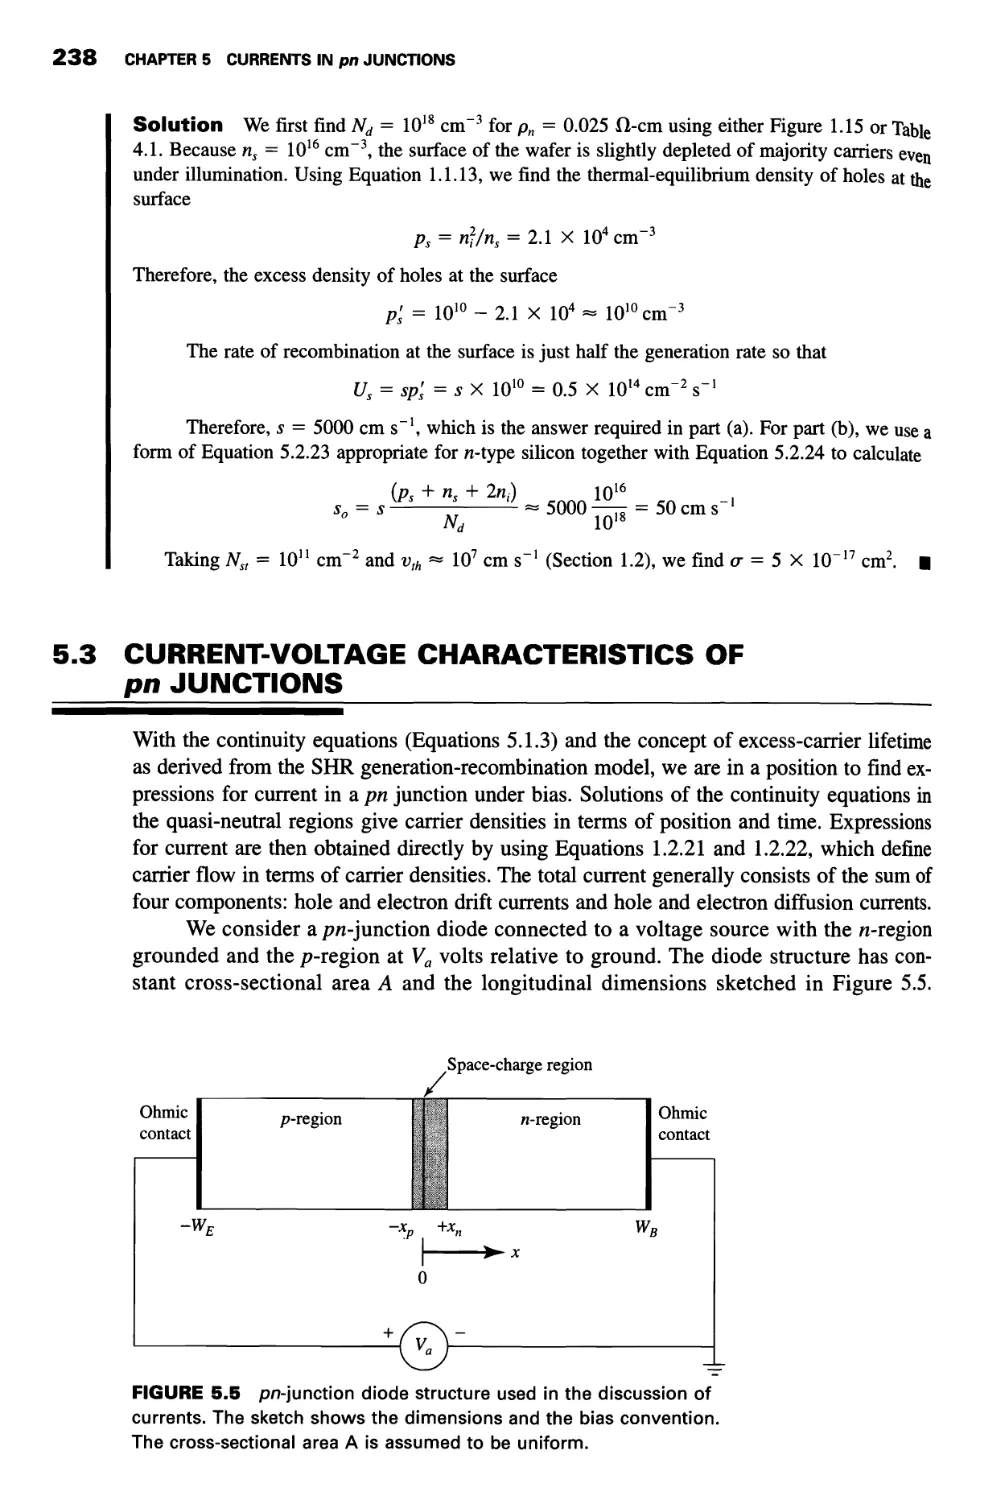 5.3 Current-Voltage Characteristics of pn Junctions